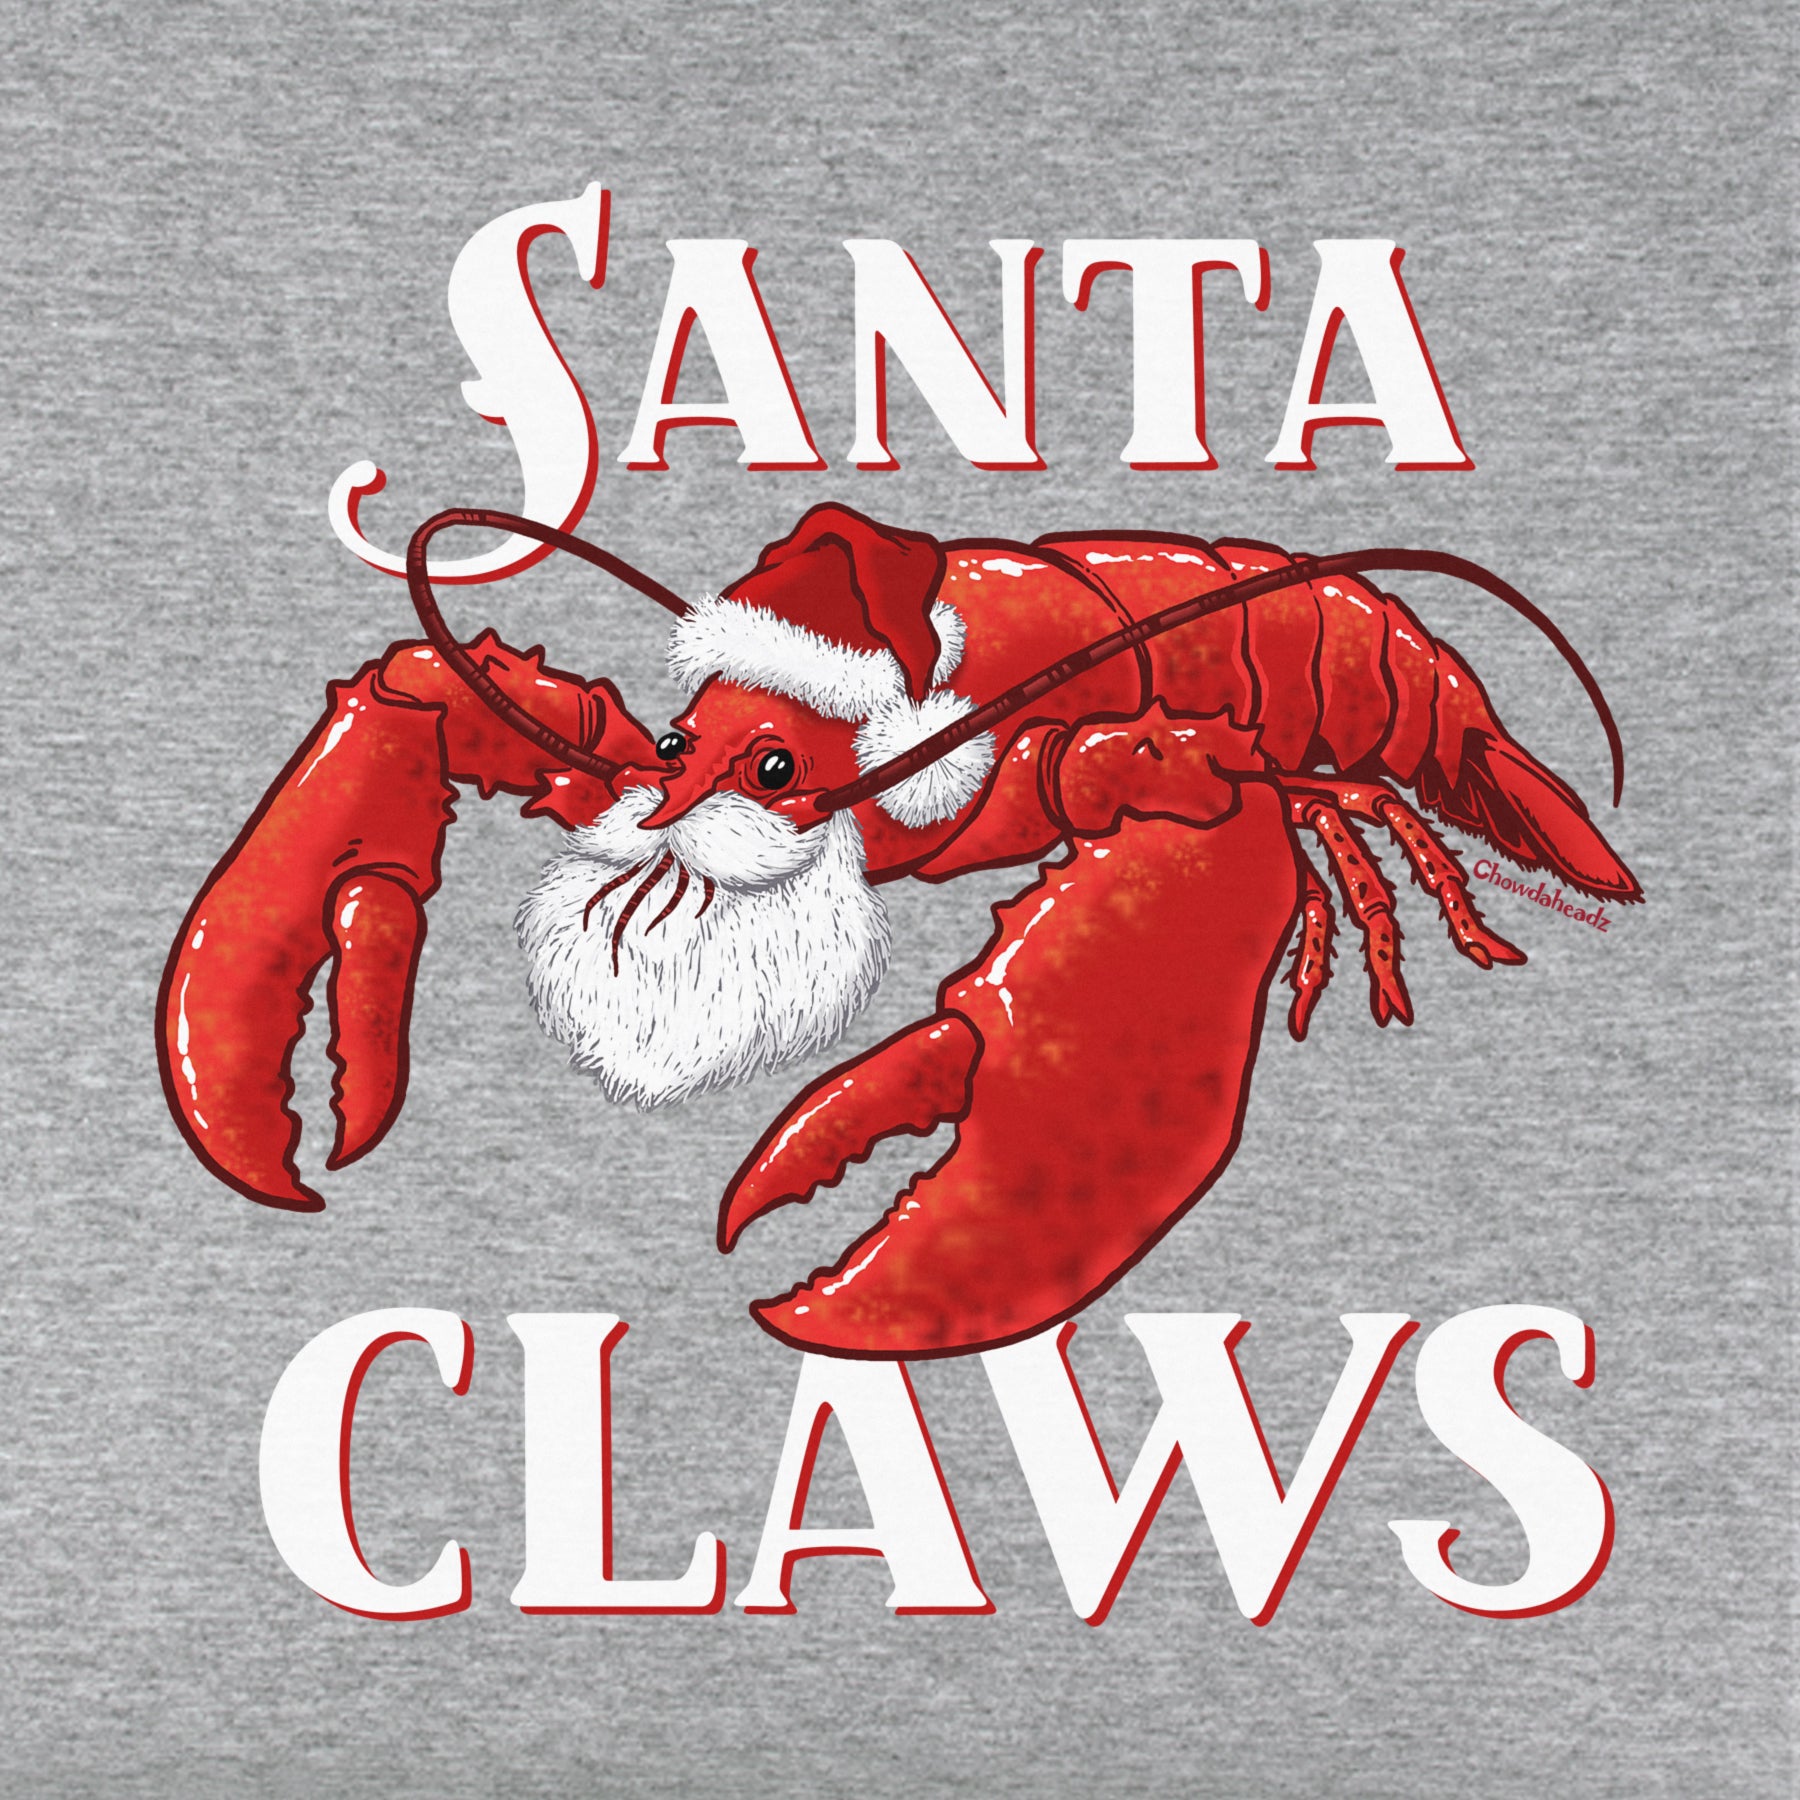 Santa Claws Holiday Youth T-Shirt - Chowdaheadz